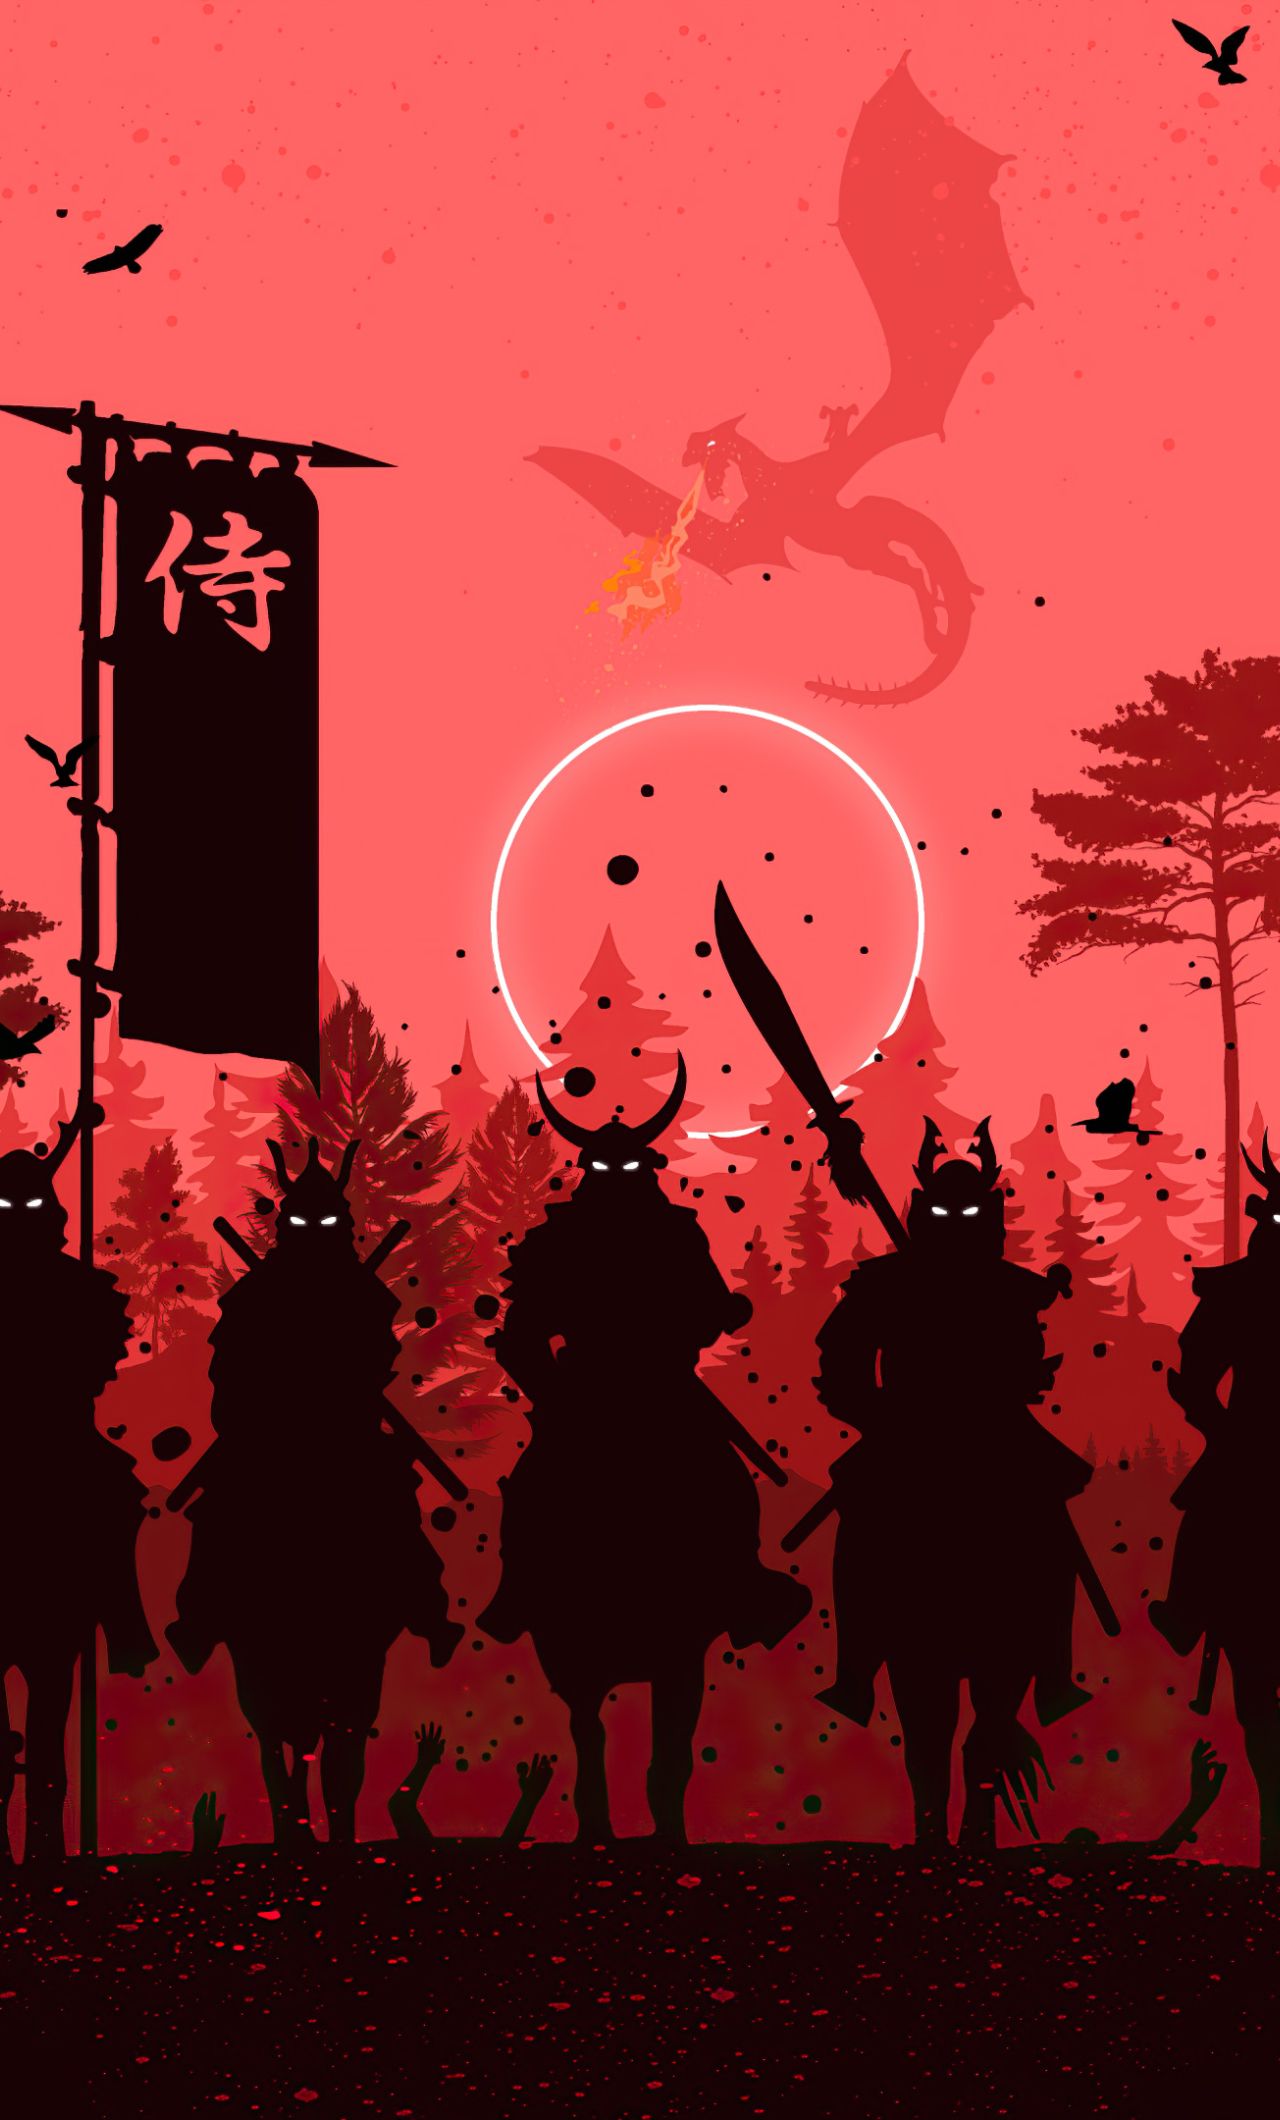 Fantasy Samurai 4k Minimal iPhone 6 plus Wallpaper, HD Artist 4K Wallpaper, Image, Photo and Background